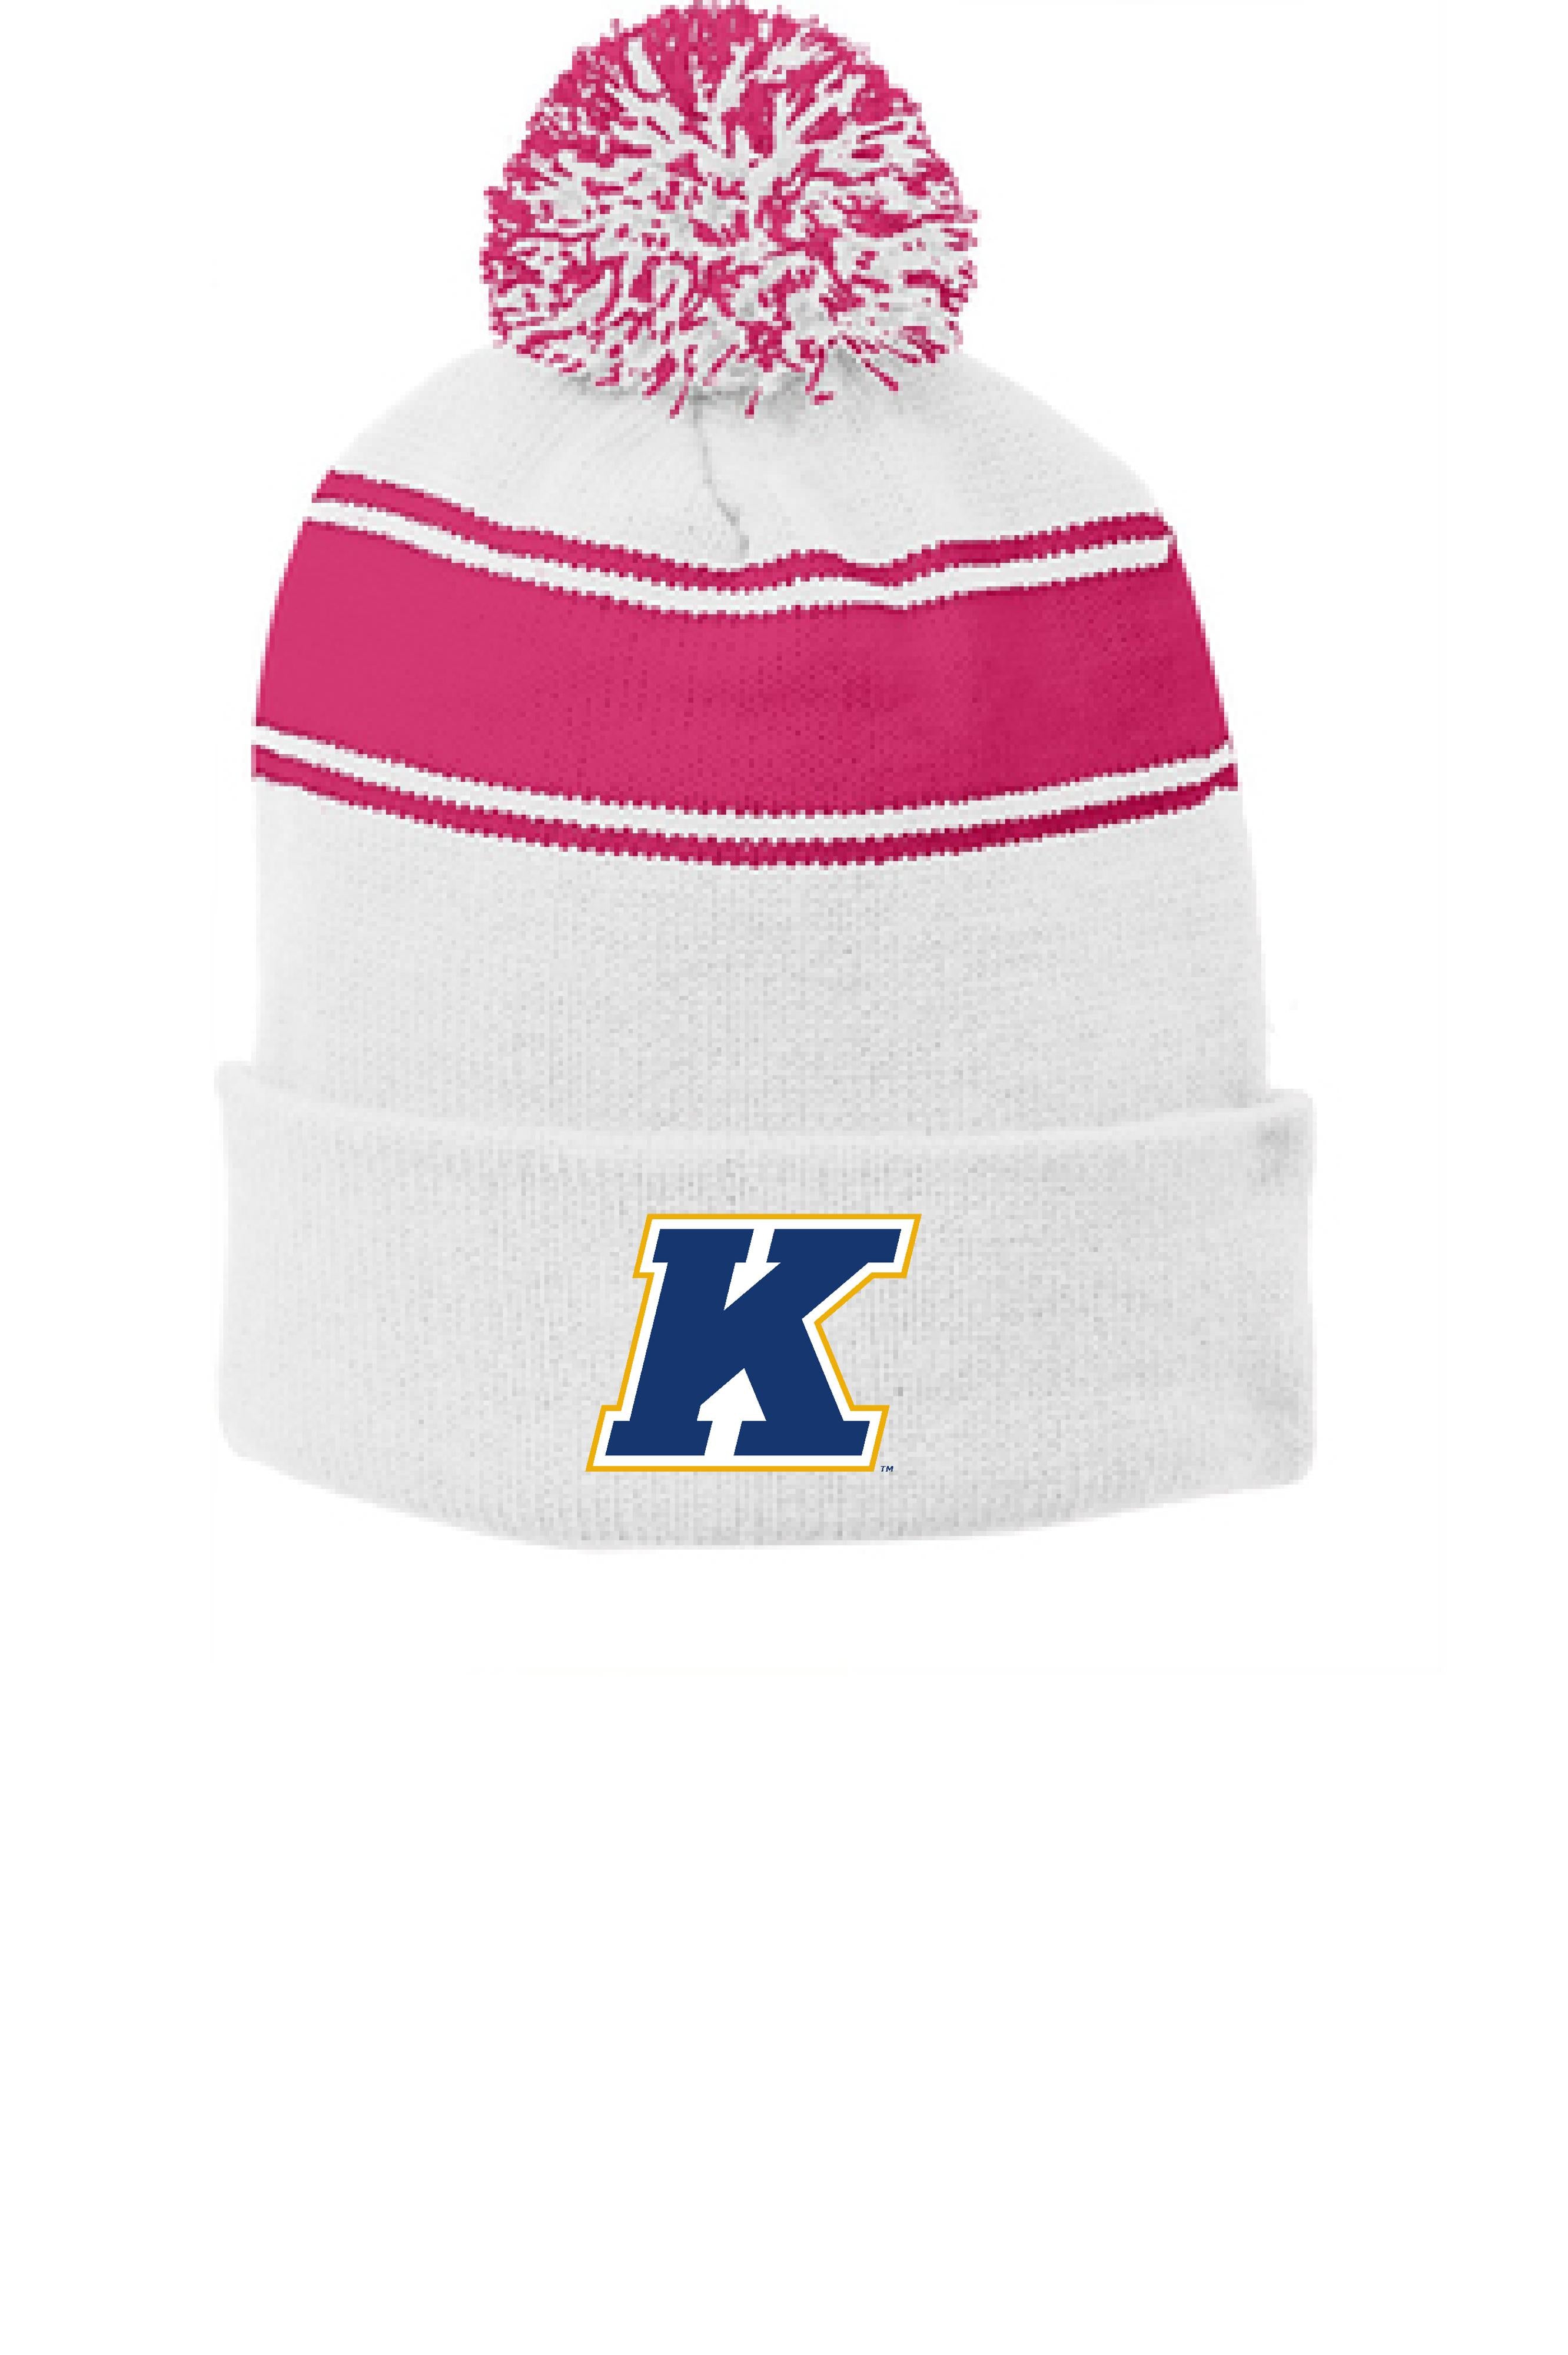 K Logo White & Pink Pom Beanie